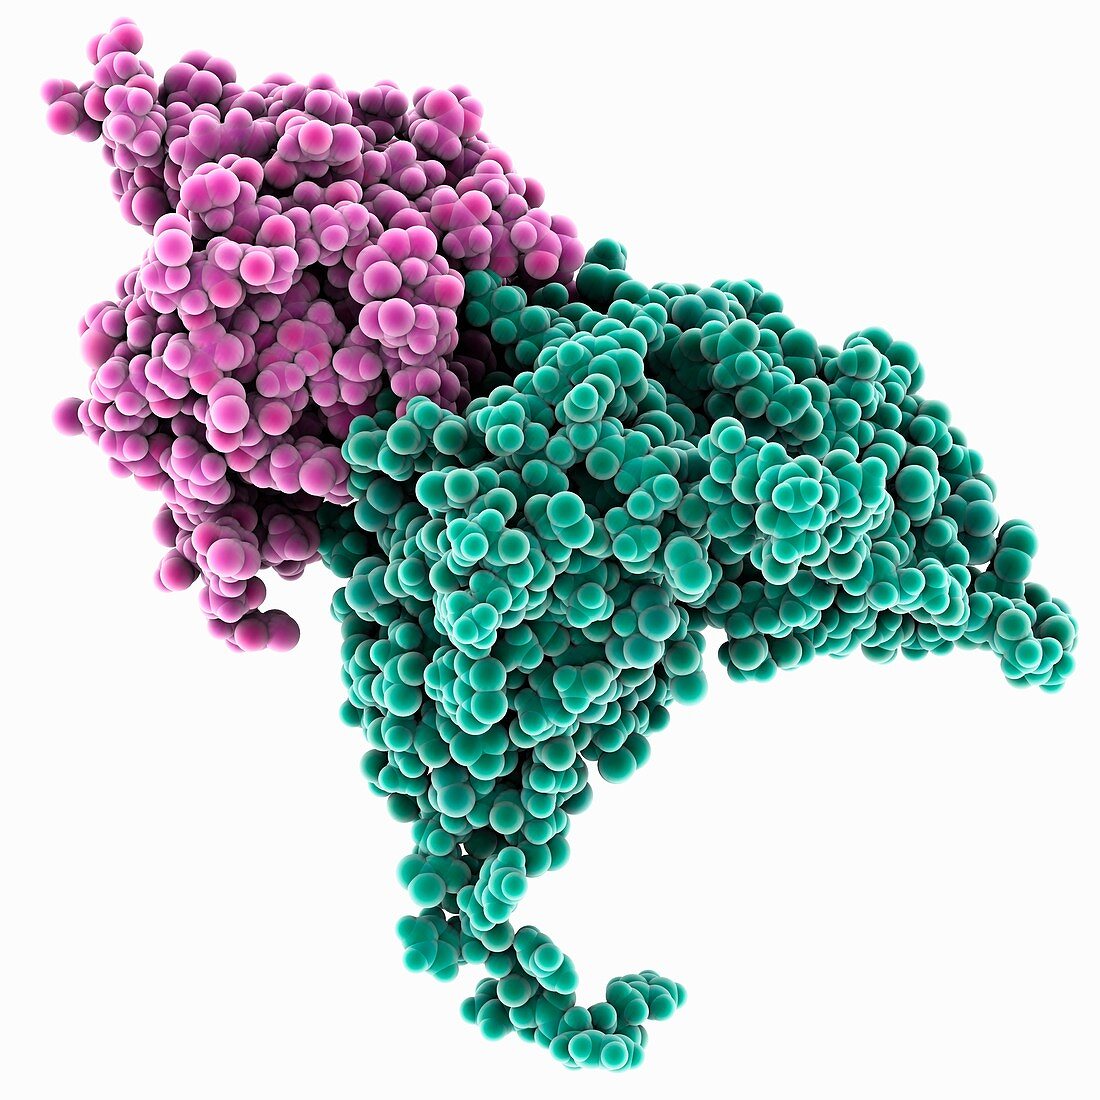 Antibody-interleukin complex, molecular model